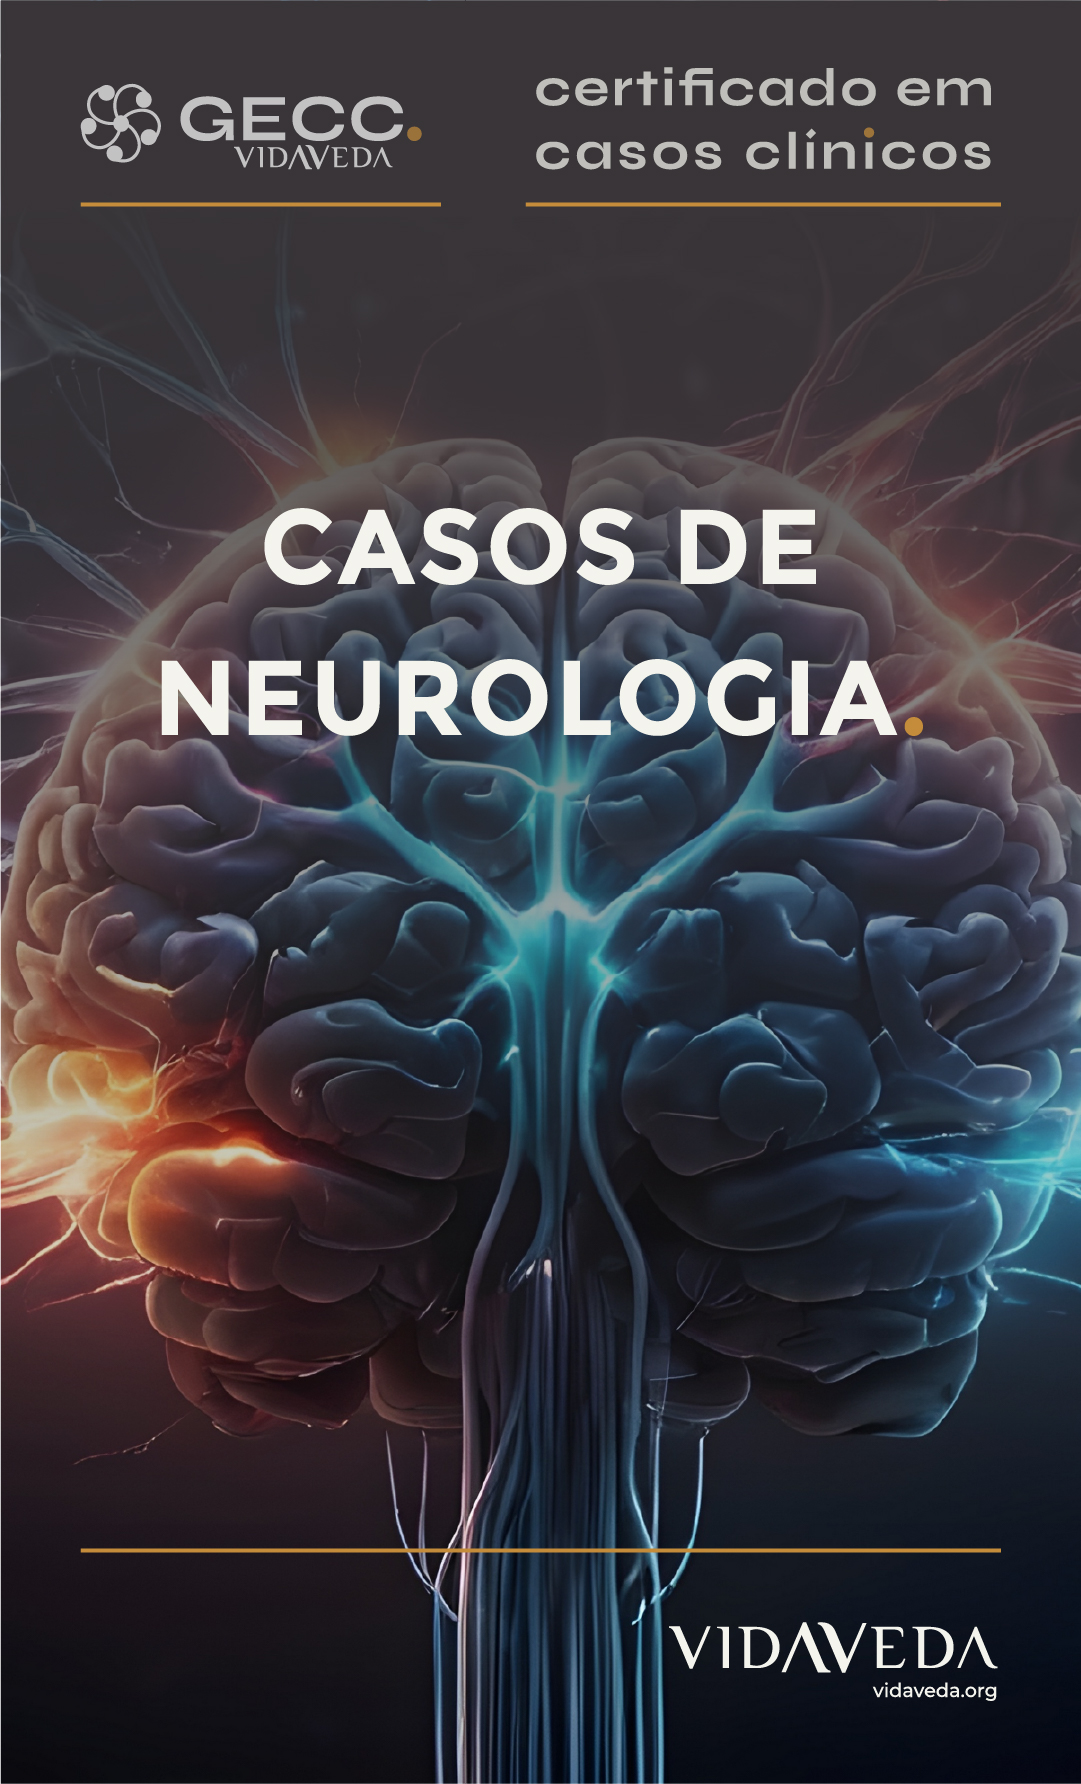 GECC - CASOS DE NEUROLOGIA